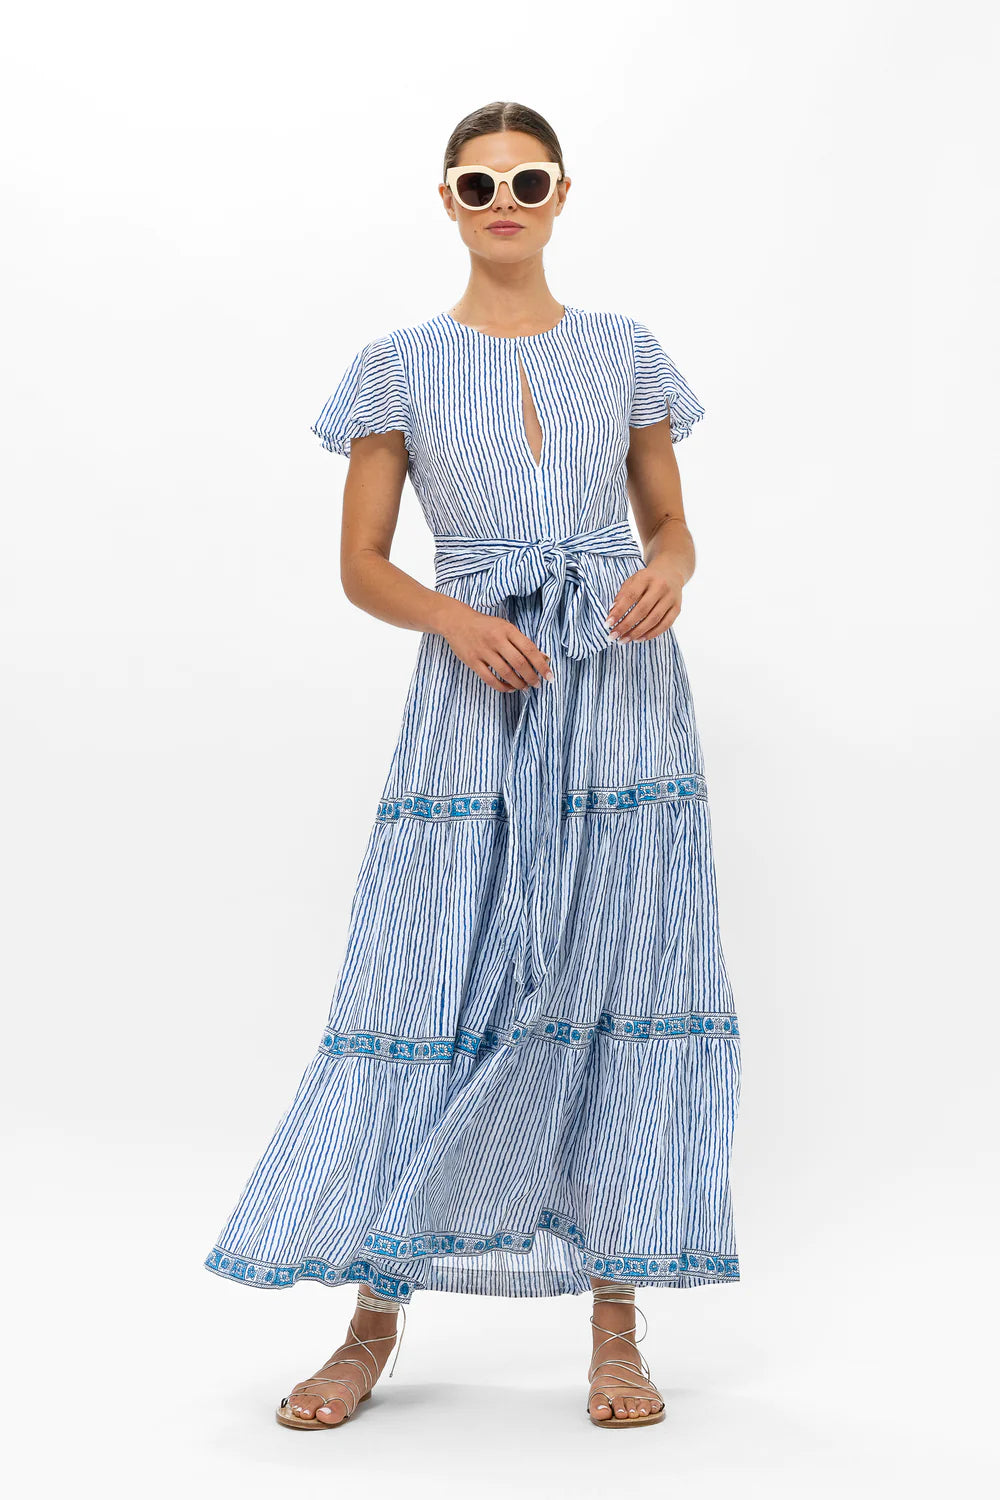 Oliphant Sorrento Blue Stripe Dress